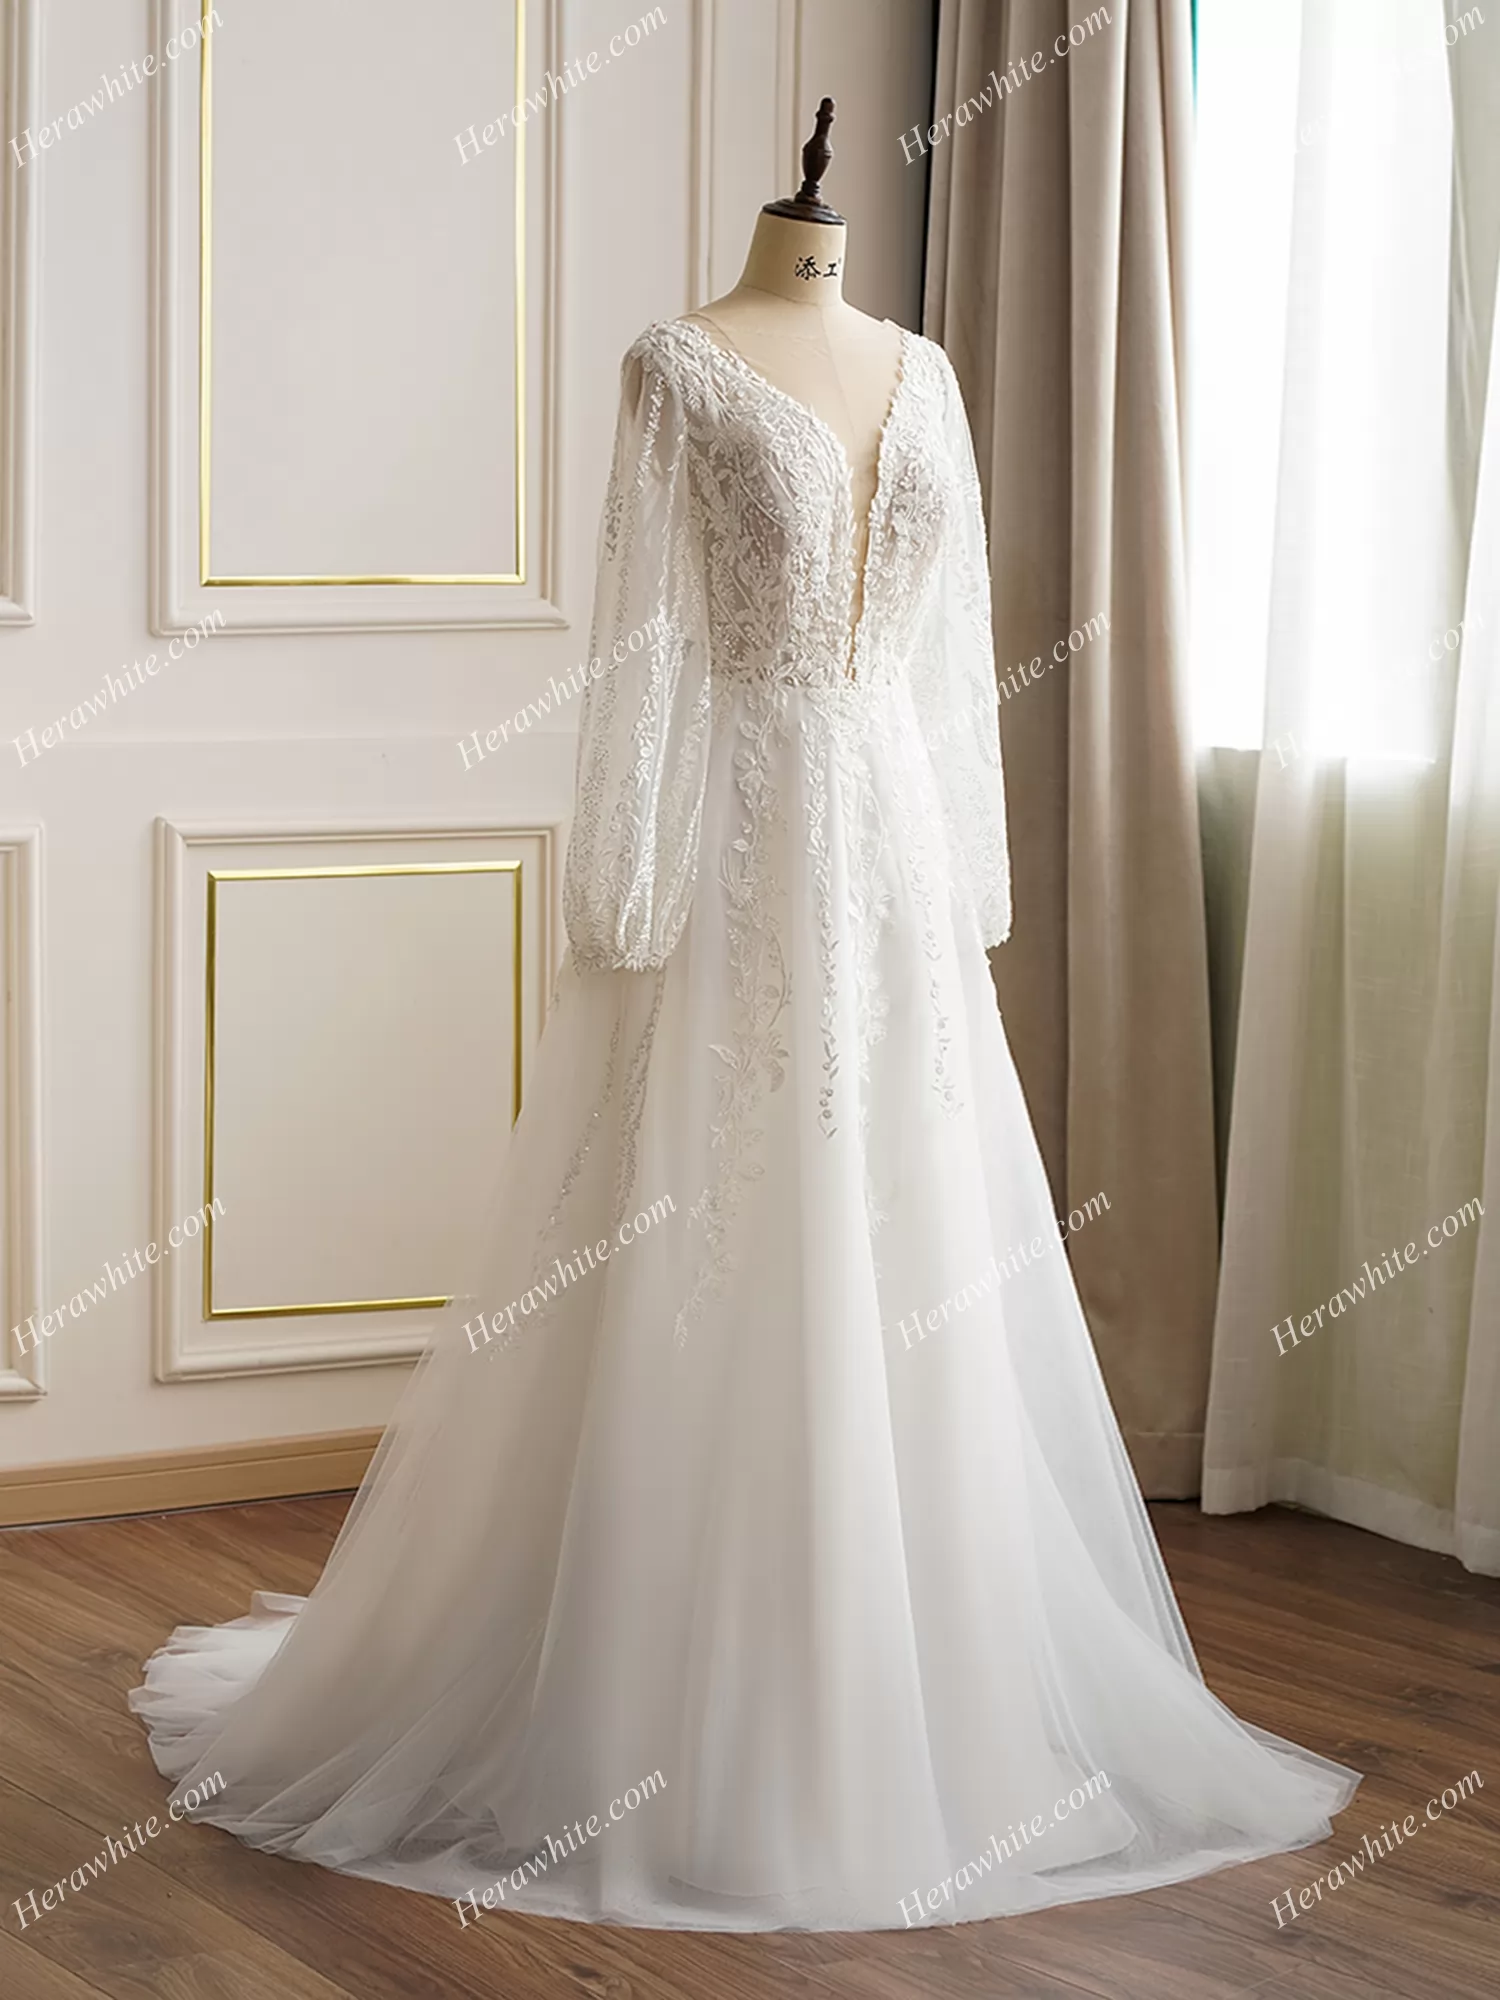 Lace Long Sleeve Plunging Neckline Wedding Dress